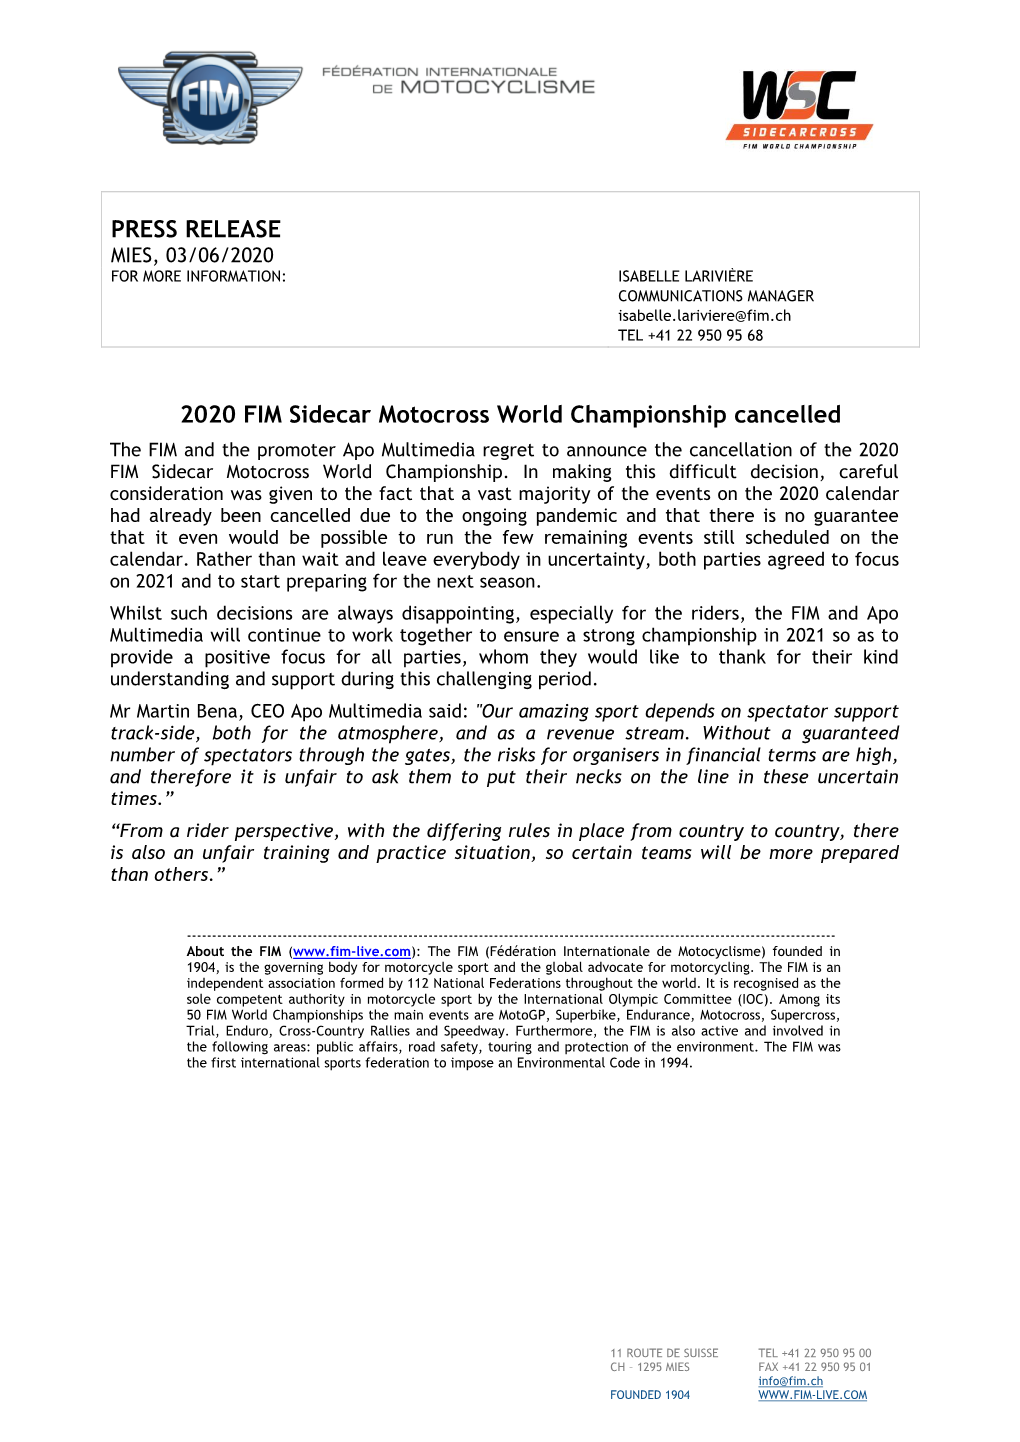 PRESS RELEASE 2020 FIM Sidecar Motocross World Championship